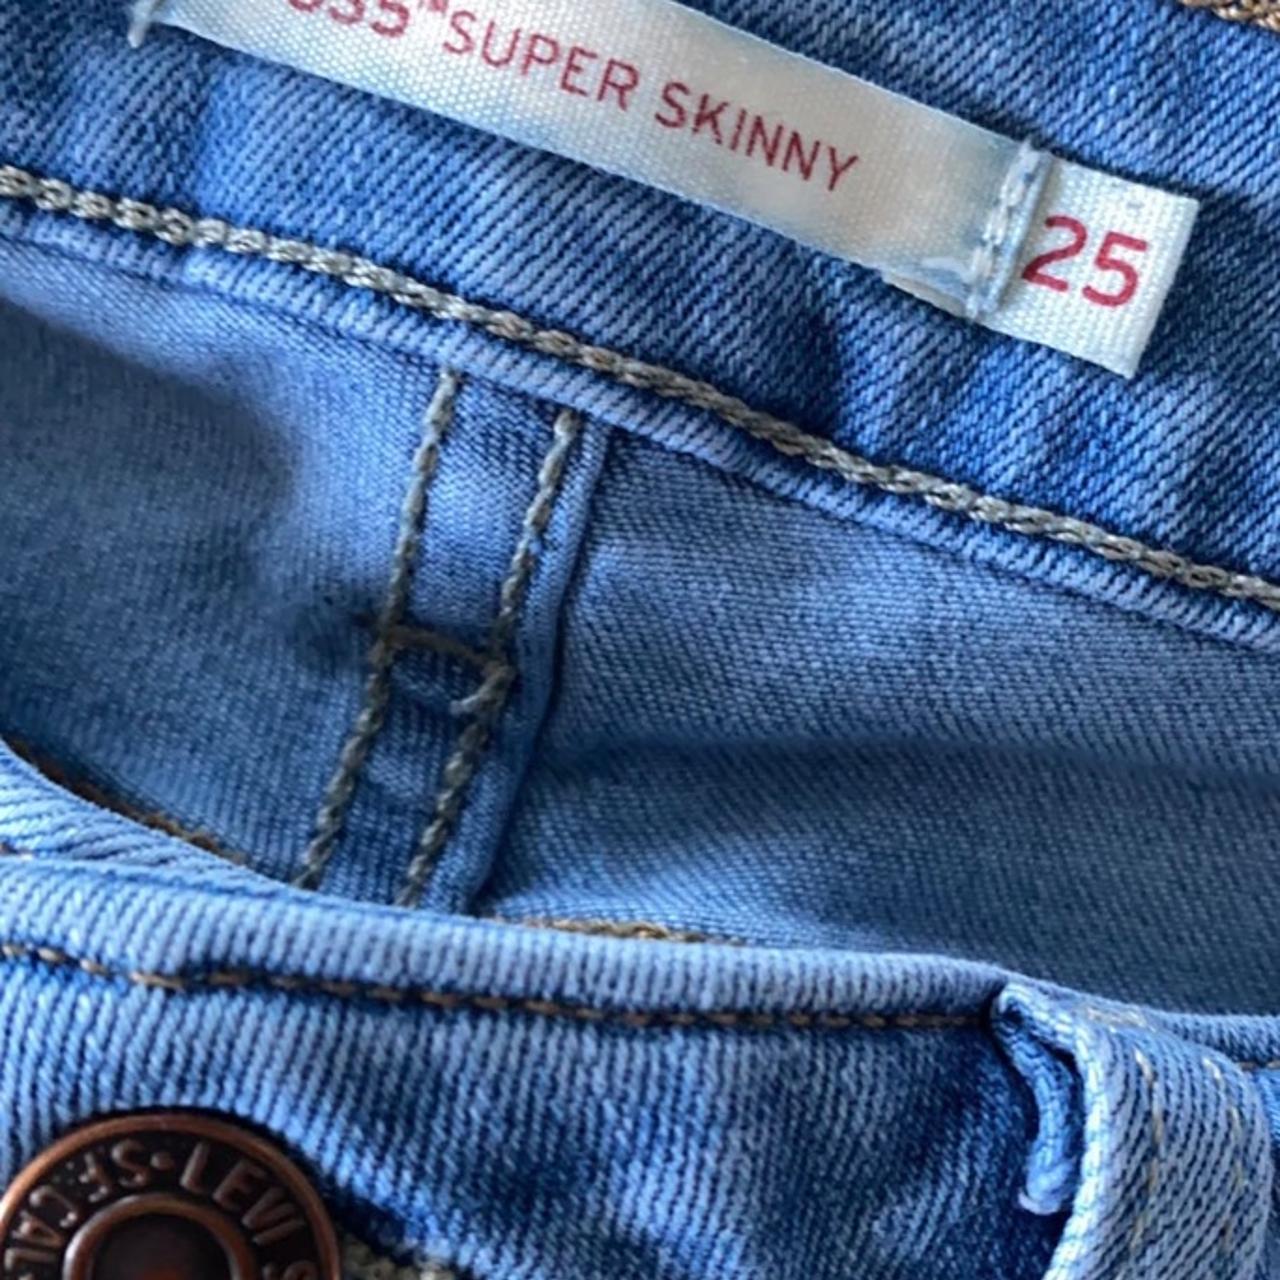 Levi Super Skinny Jeans Size 25 In Great Depop 